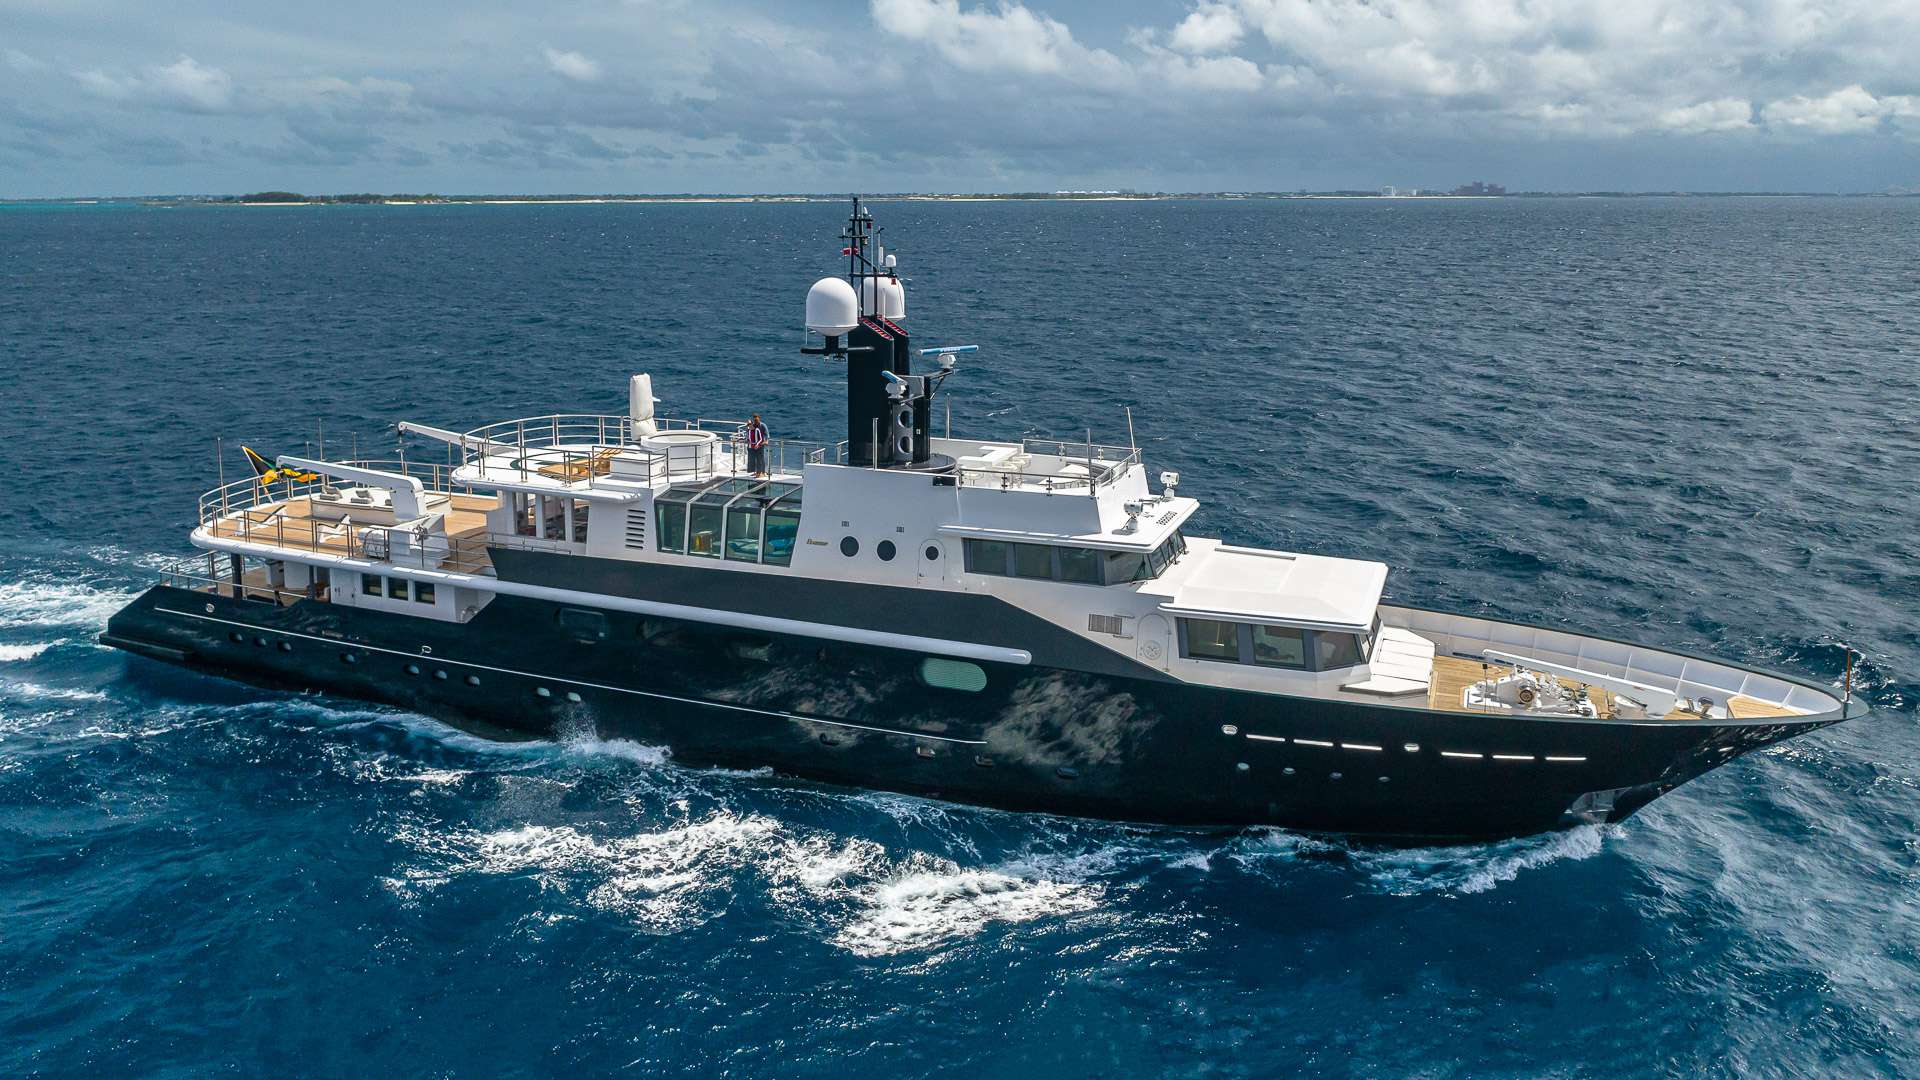 HIGHLANDER - Superyacht charter Grenada & Boat hire in Caribbean, Bahamas, Florida East Coast, Cuba, Dominican Republic, Turks and Caicos, USA South East 1